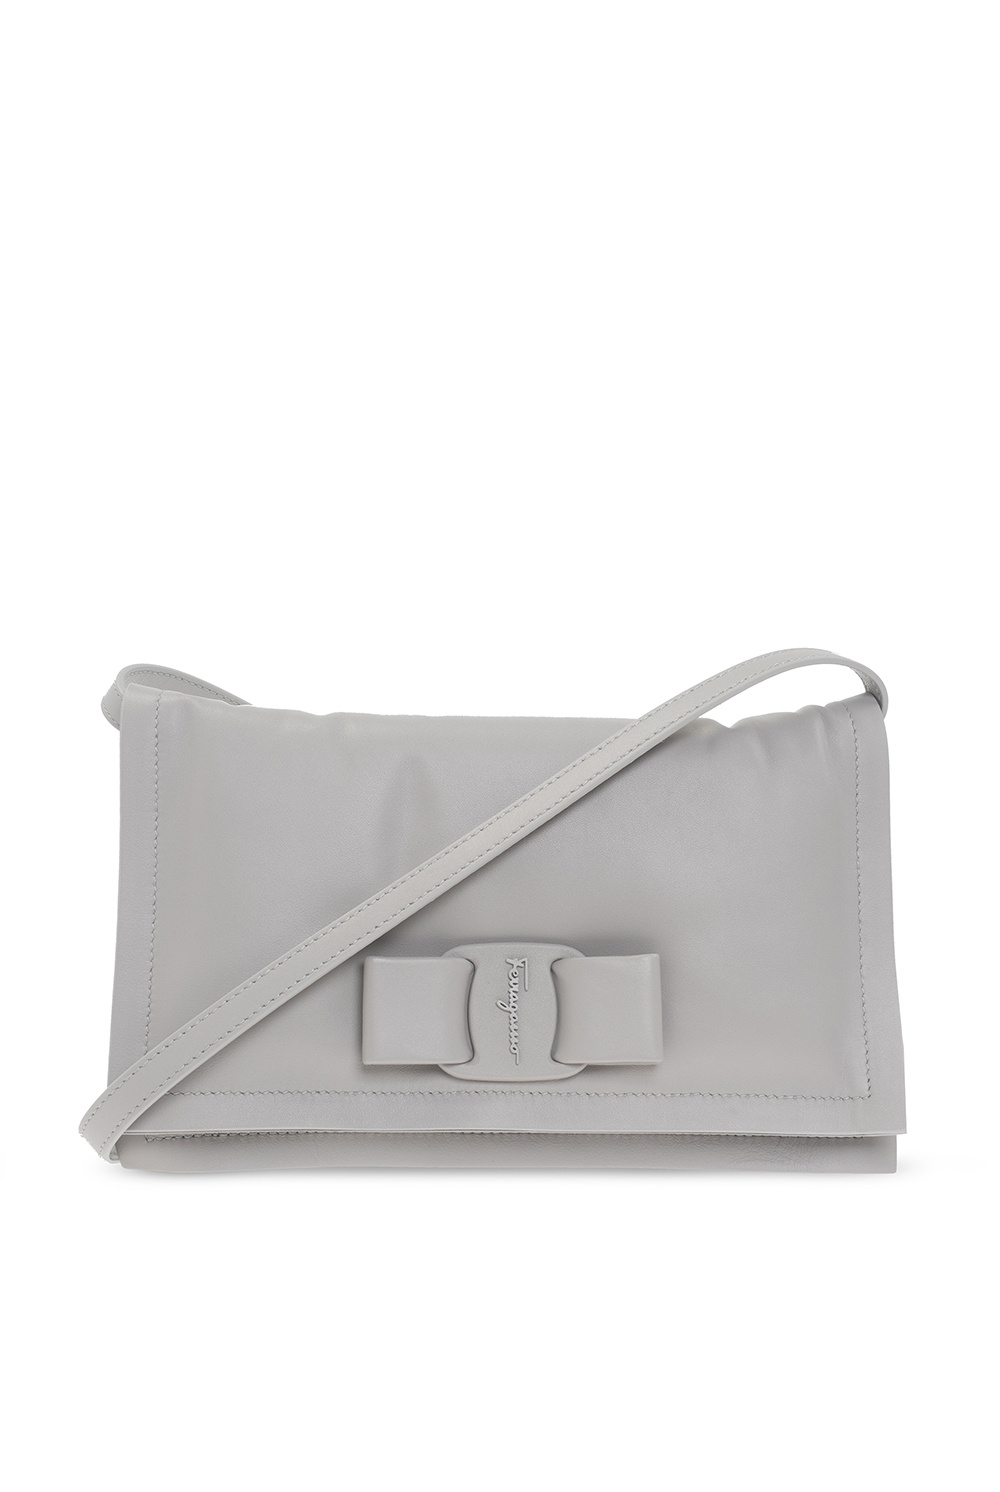 Salvatore Ferragamo Viva Puffy Calfskin Leather Shoulder Bag In White